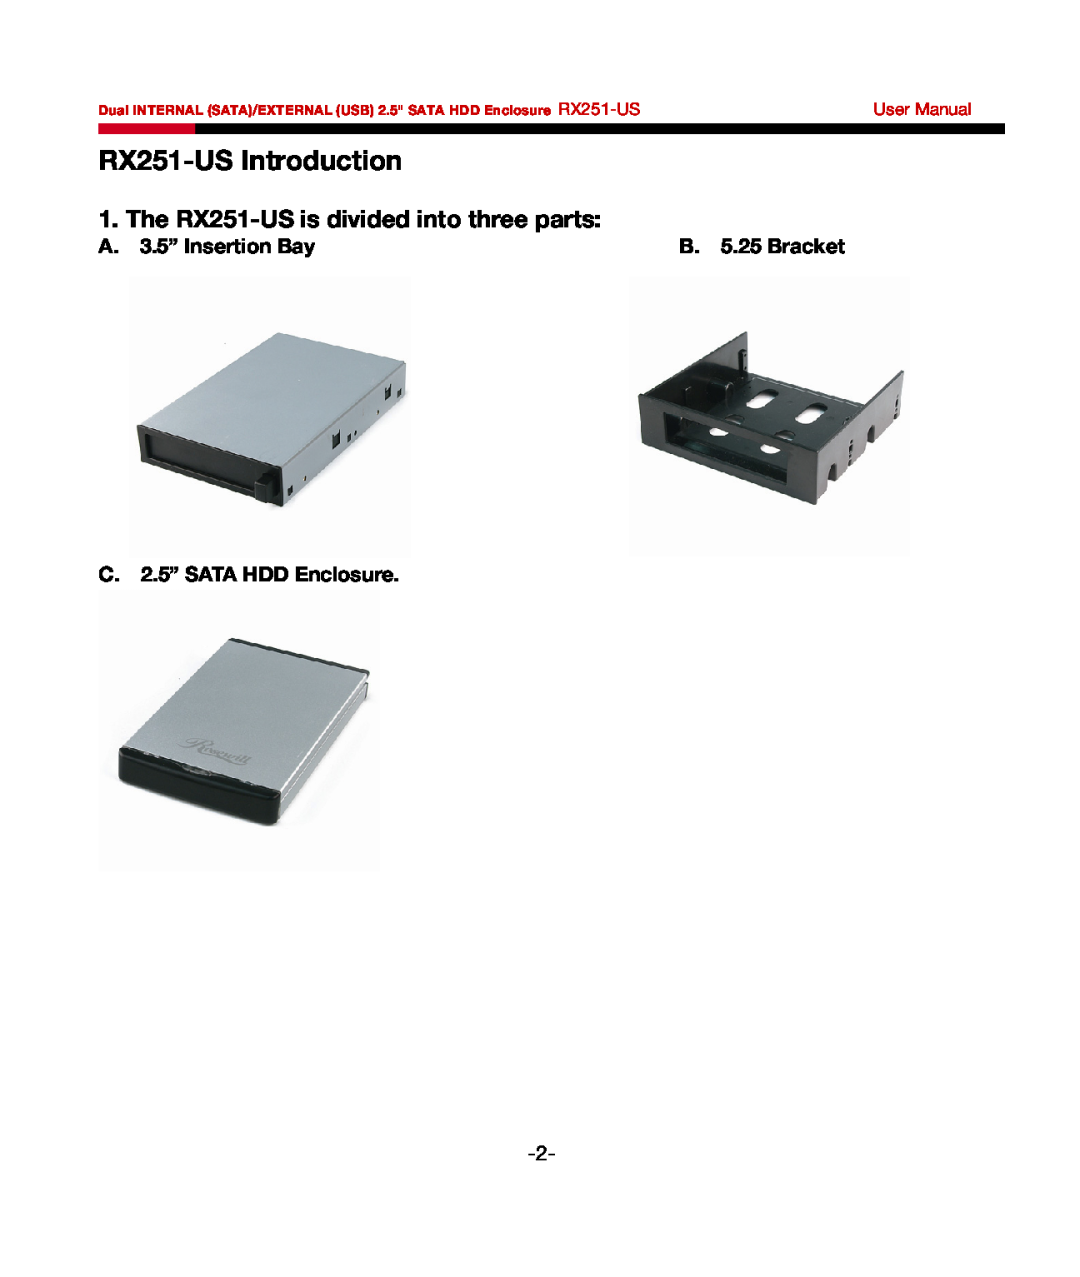 Rosewill RX251-US Introduction, A. 3.5” Insertion Bay, B. 5.25 Bracket, C. 2.5” SATA HDD Enclosure, User Manual 